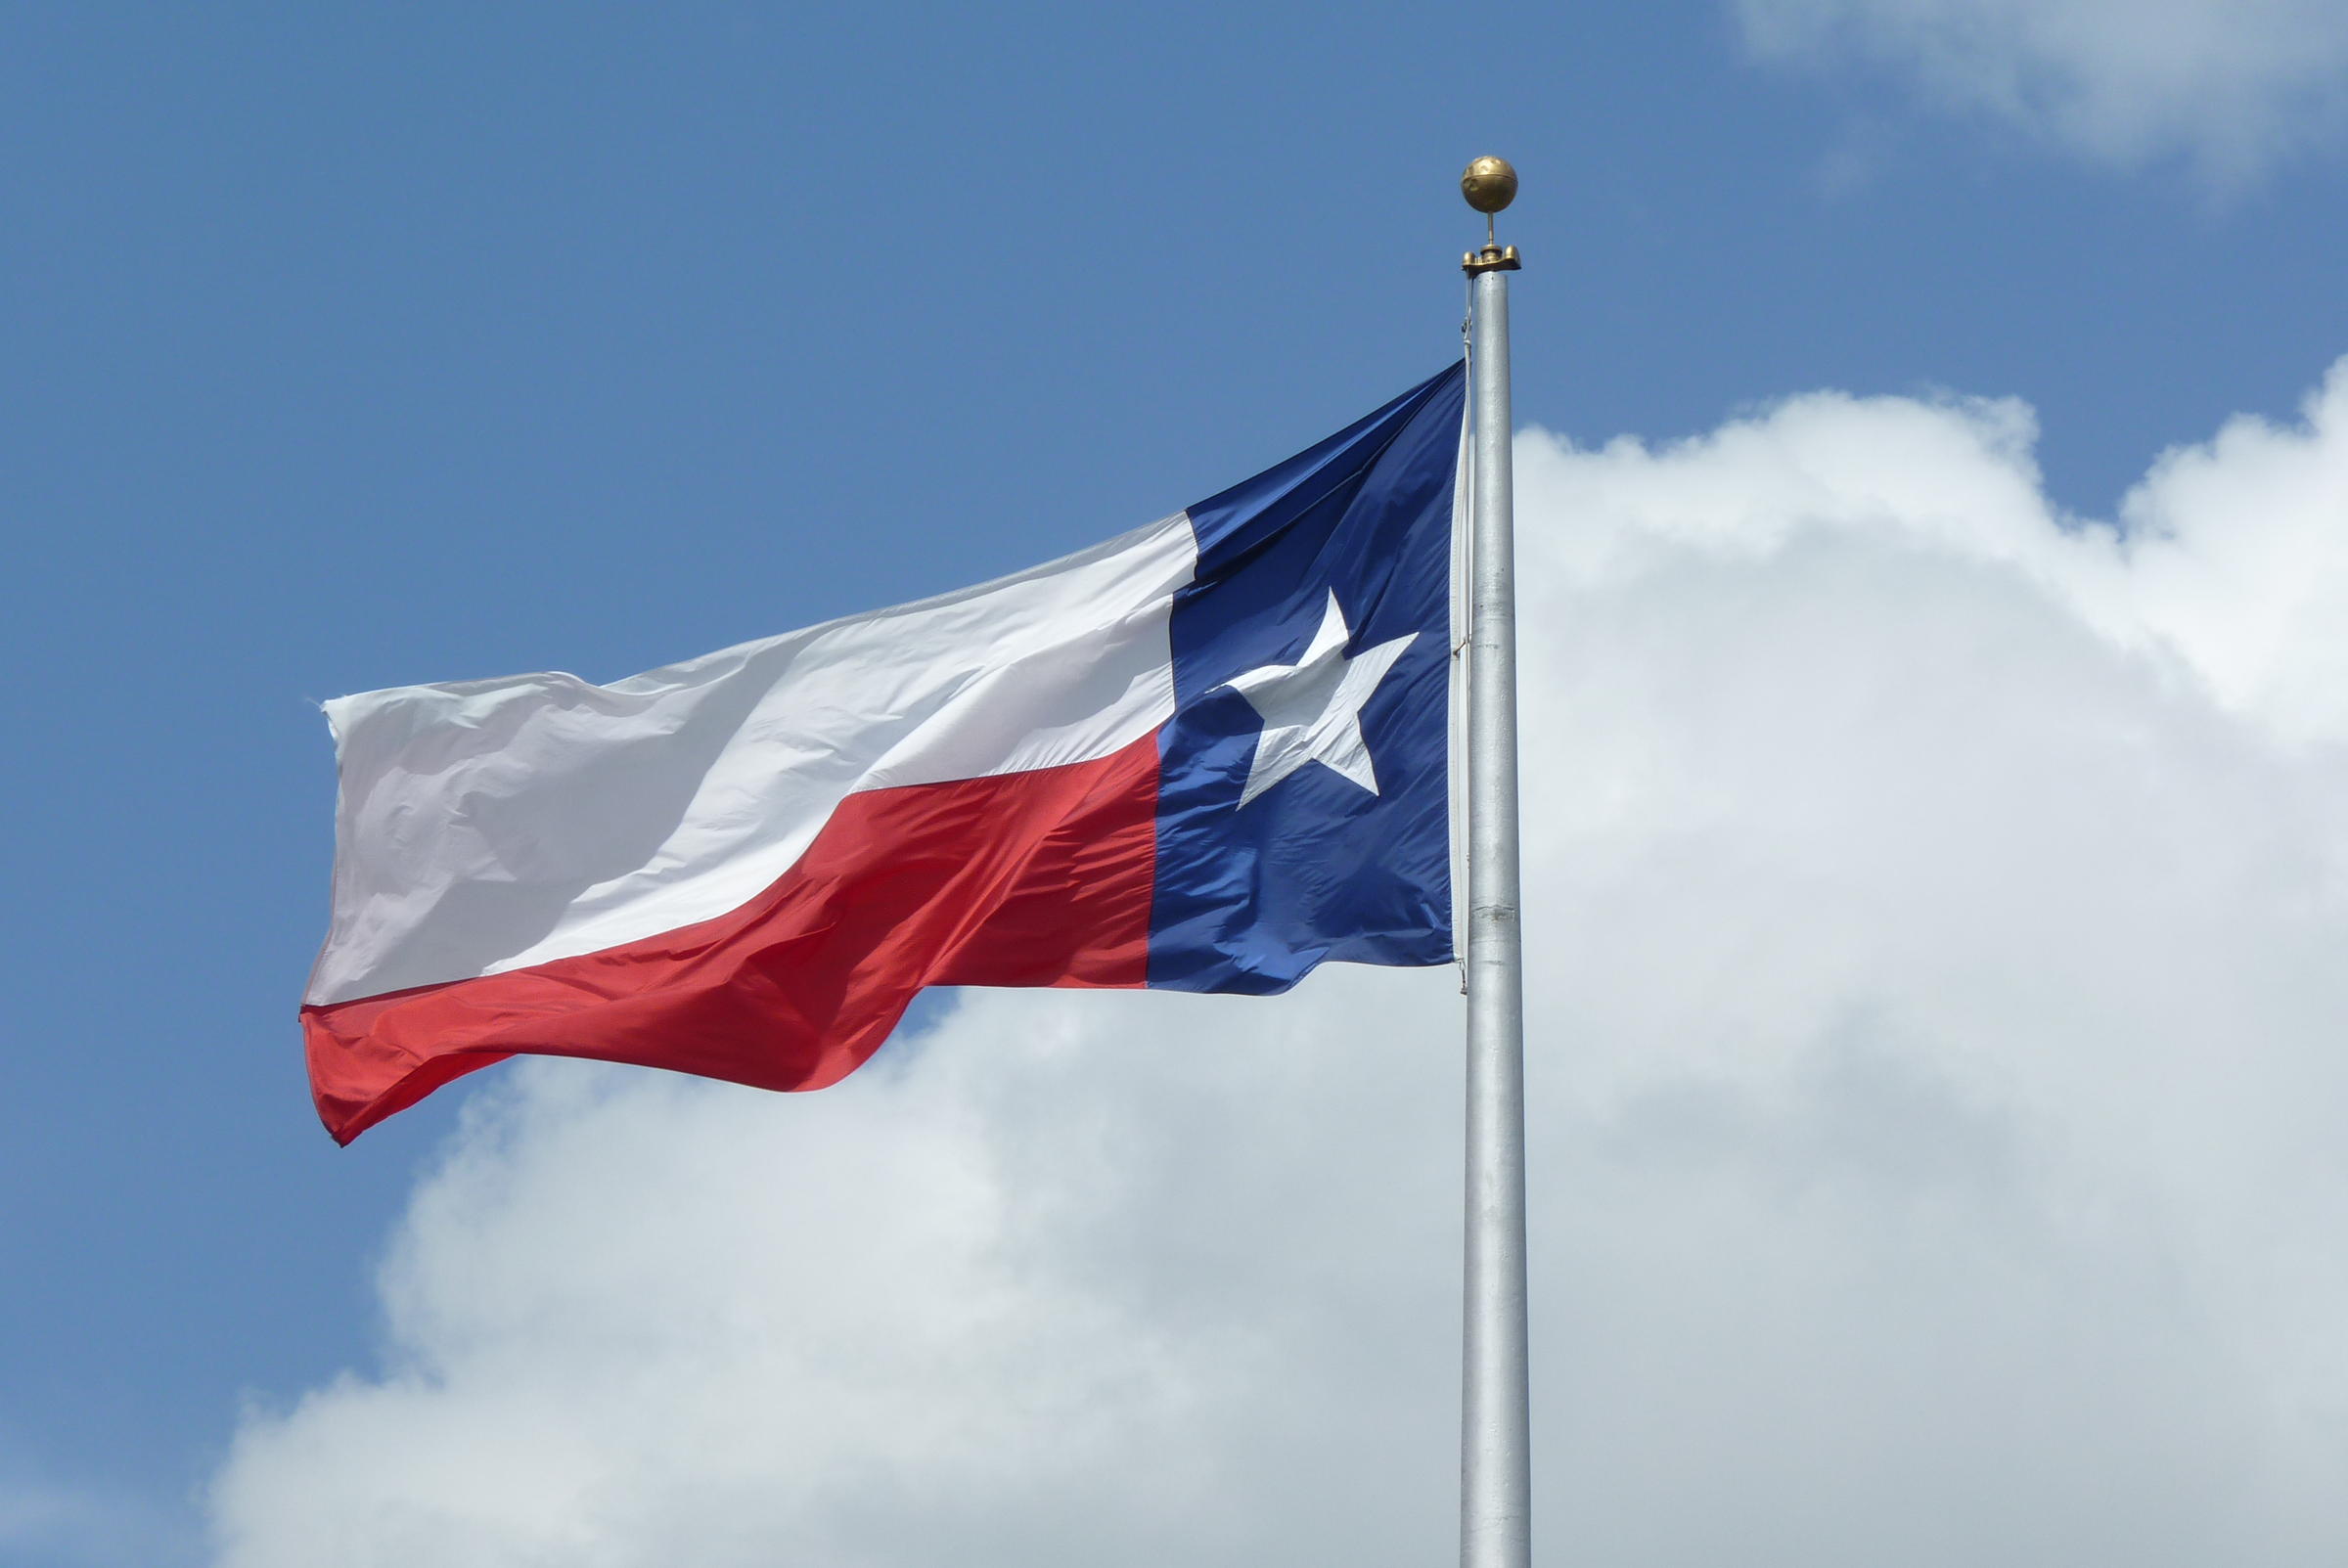 Texas Flag Waving in the Sky